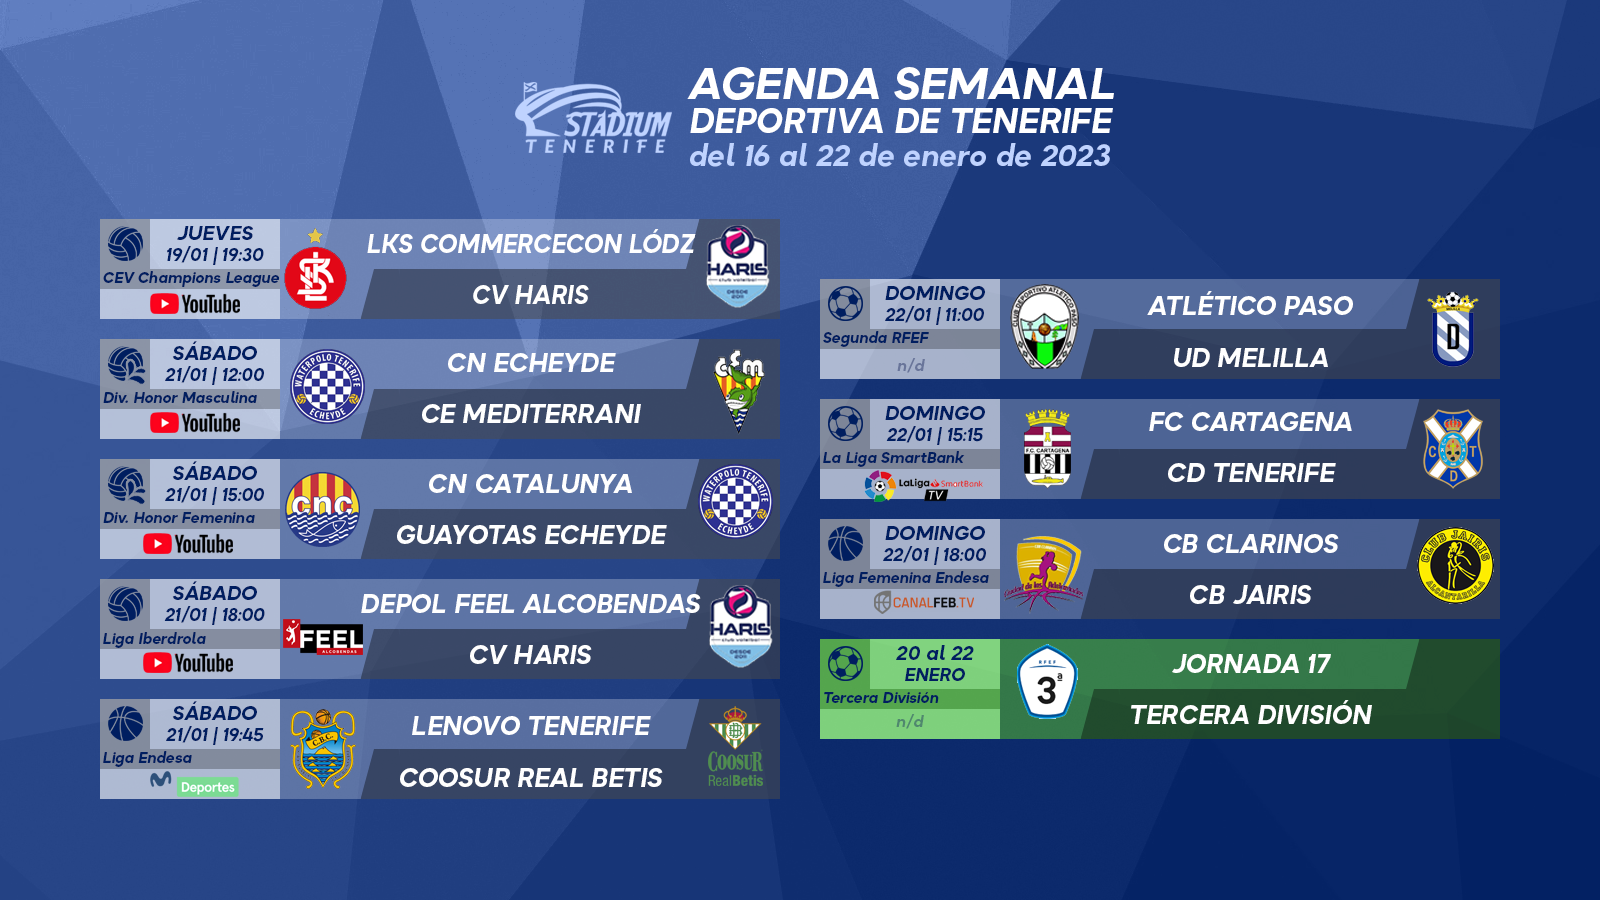 Agenda Semanal Deportiva de Tenerife (16 al 22 de enero)